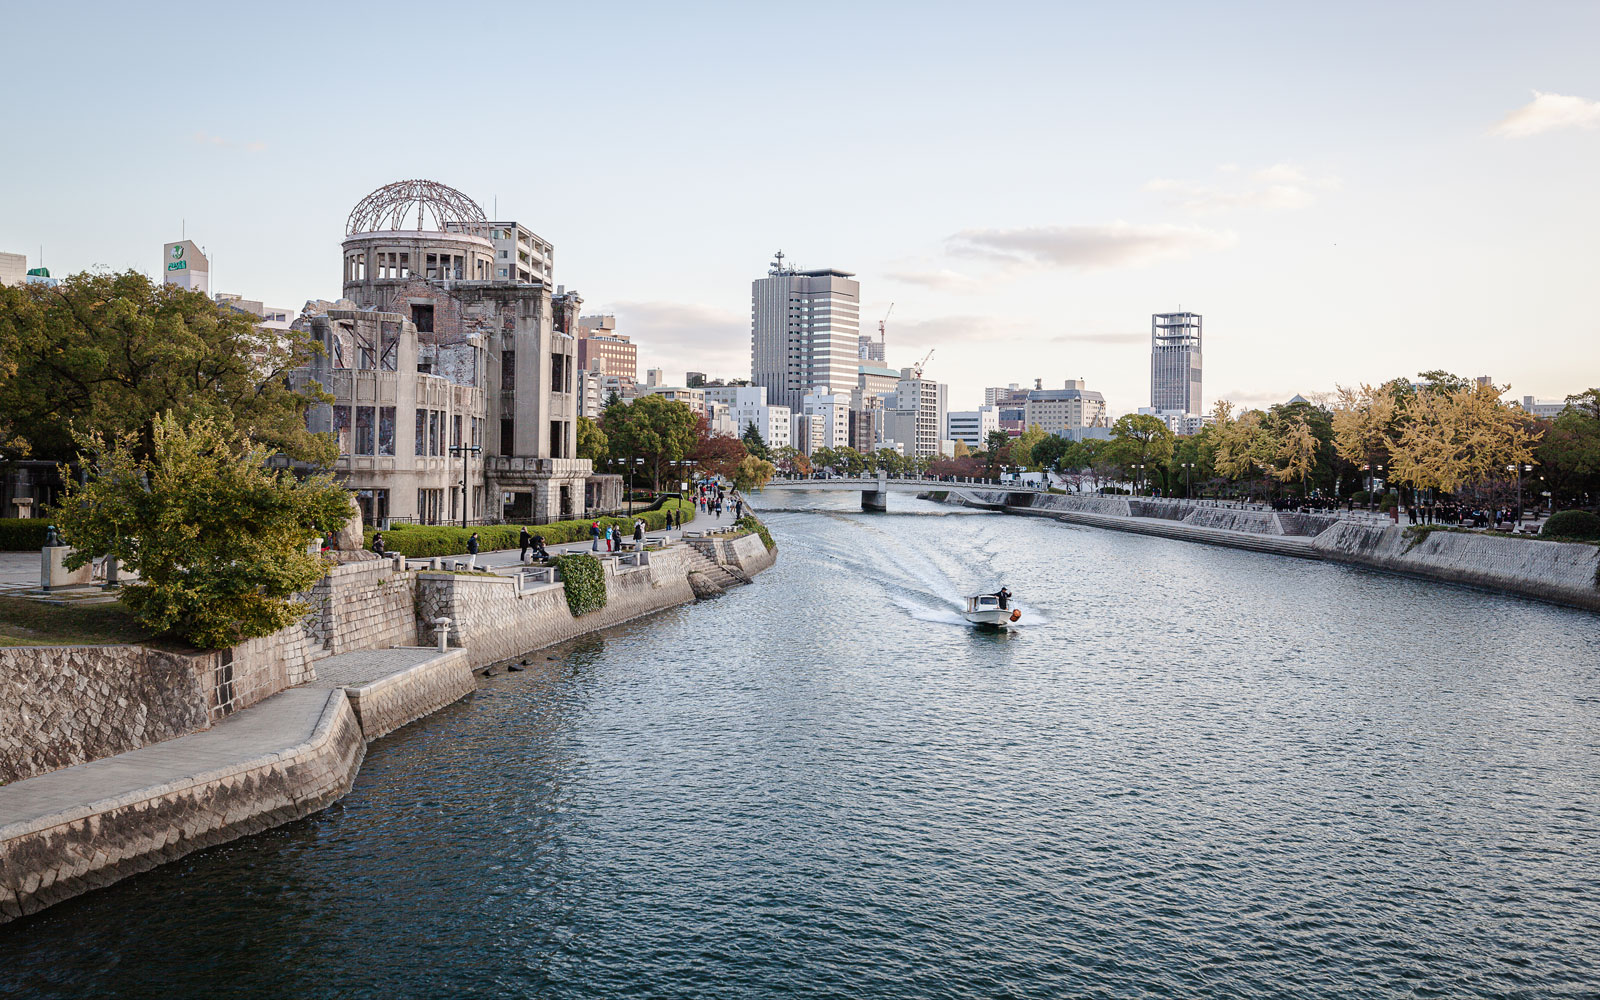 Hiroshima atomic bomb dome